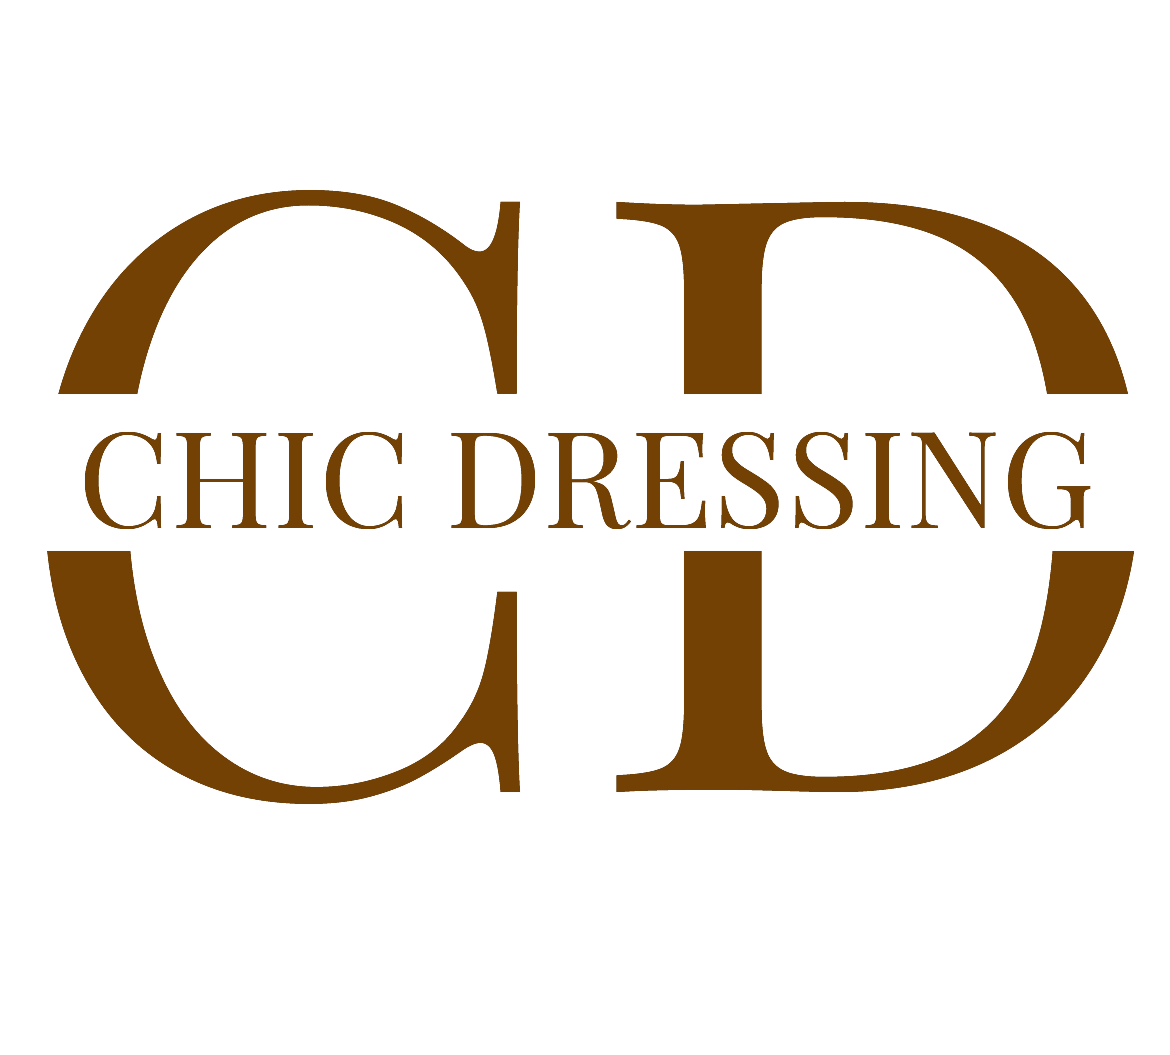 chicdressing